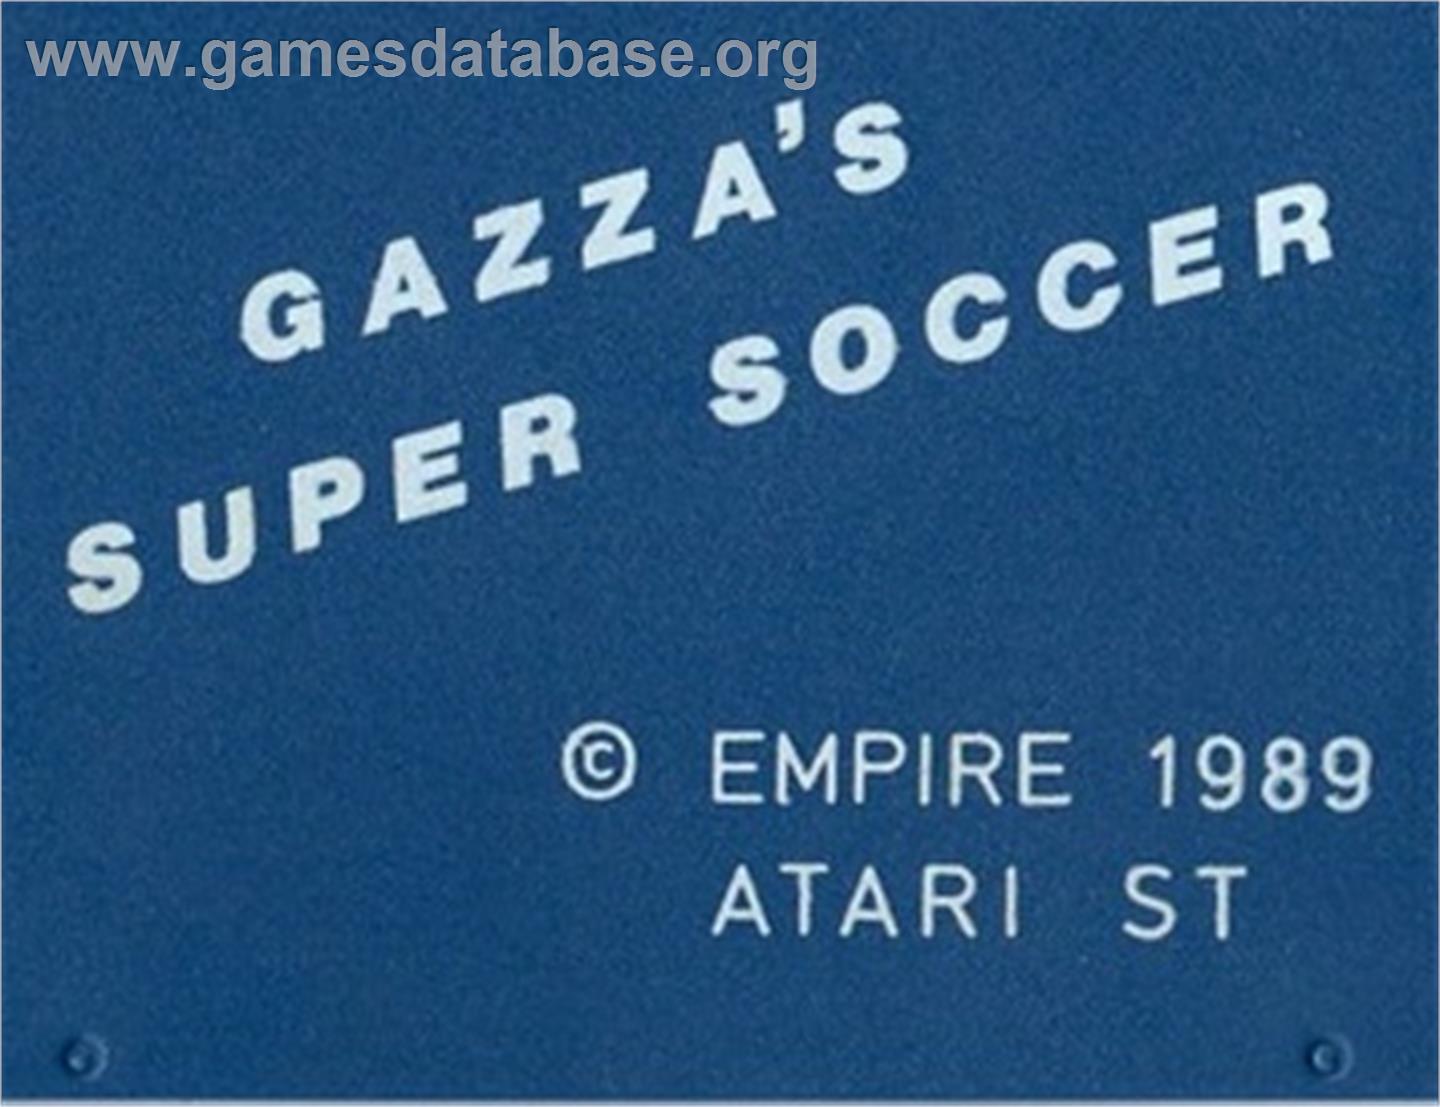 Gazza's Super Soccer - Atari ST - Artwork - Cartridge Top